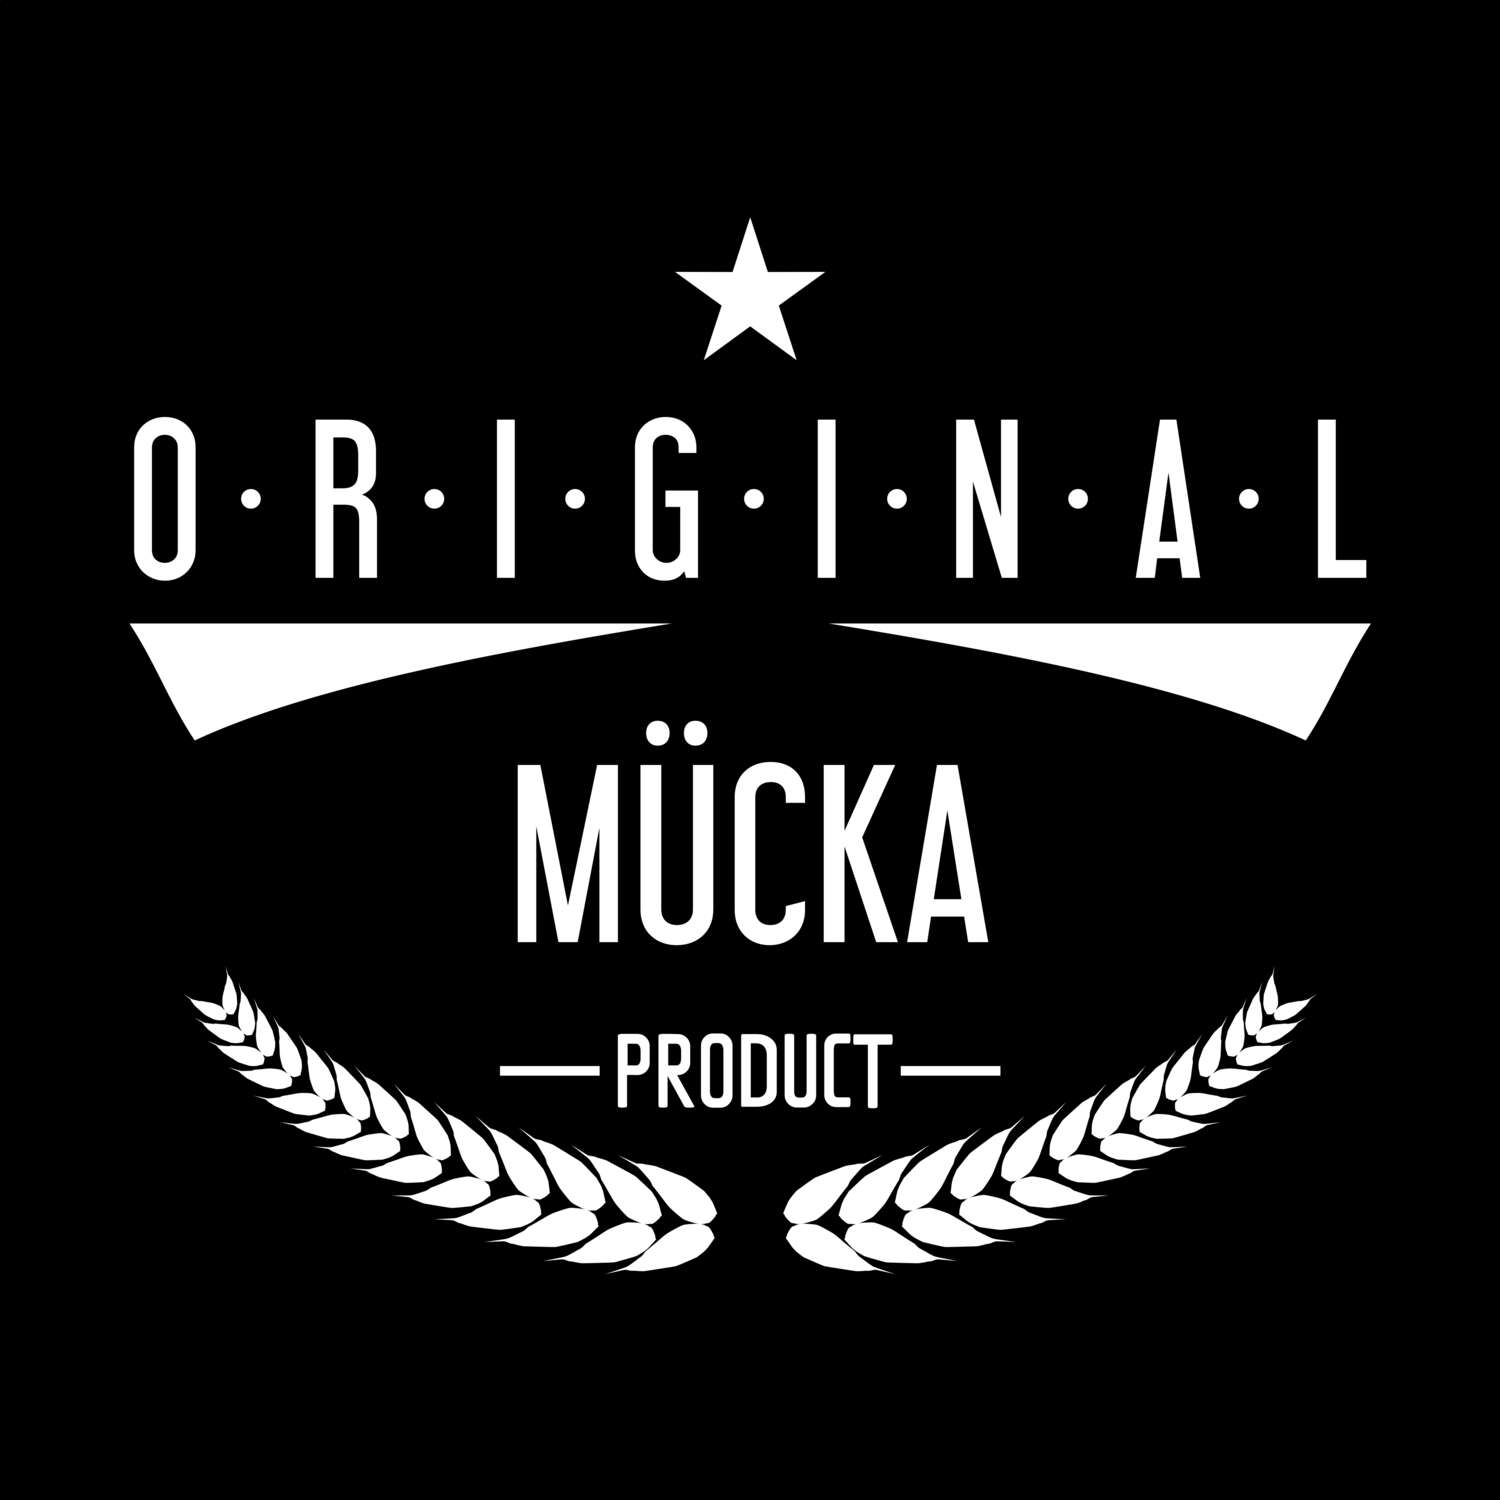 Mücka T-Shirt »Original Product«